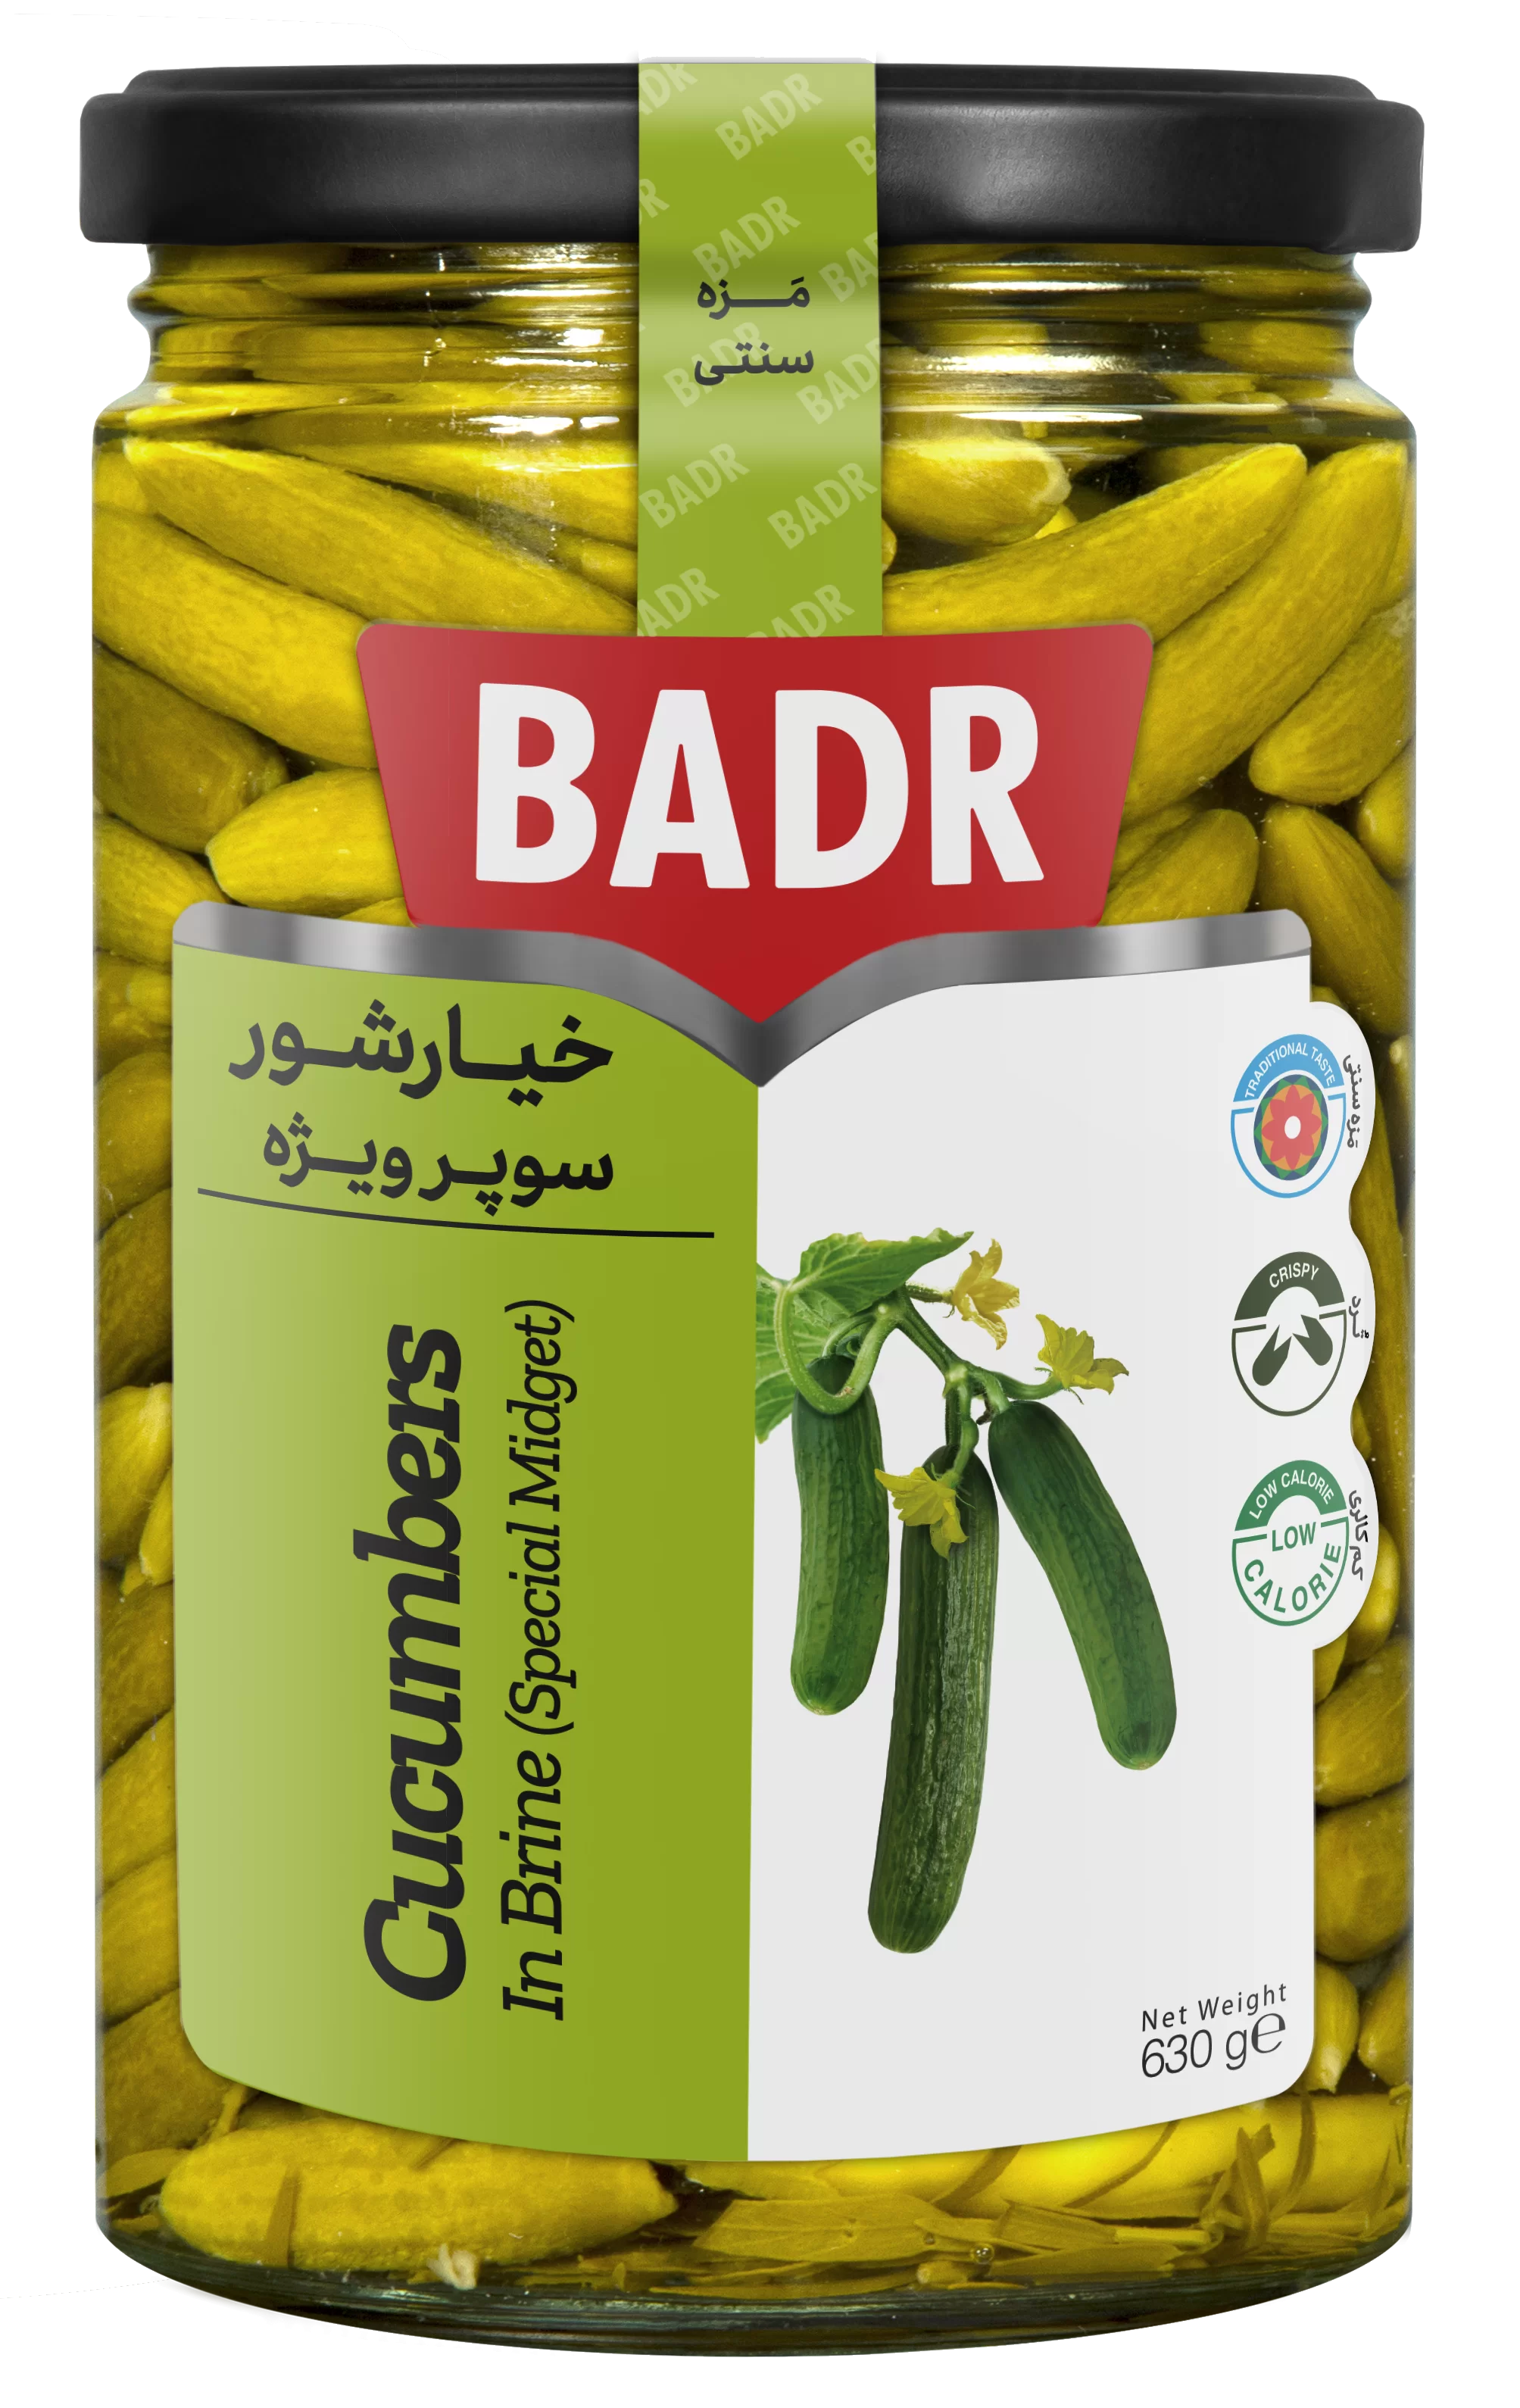 BADR Pickled Special Midget Cucumbers 630g